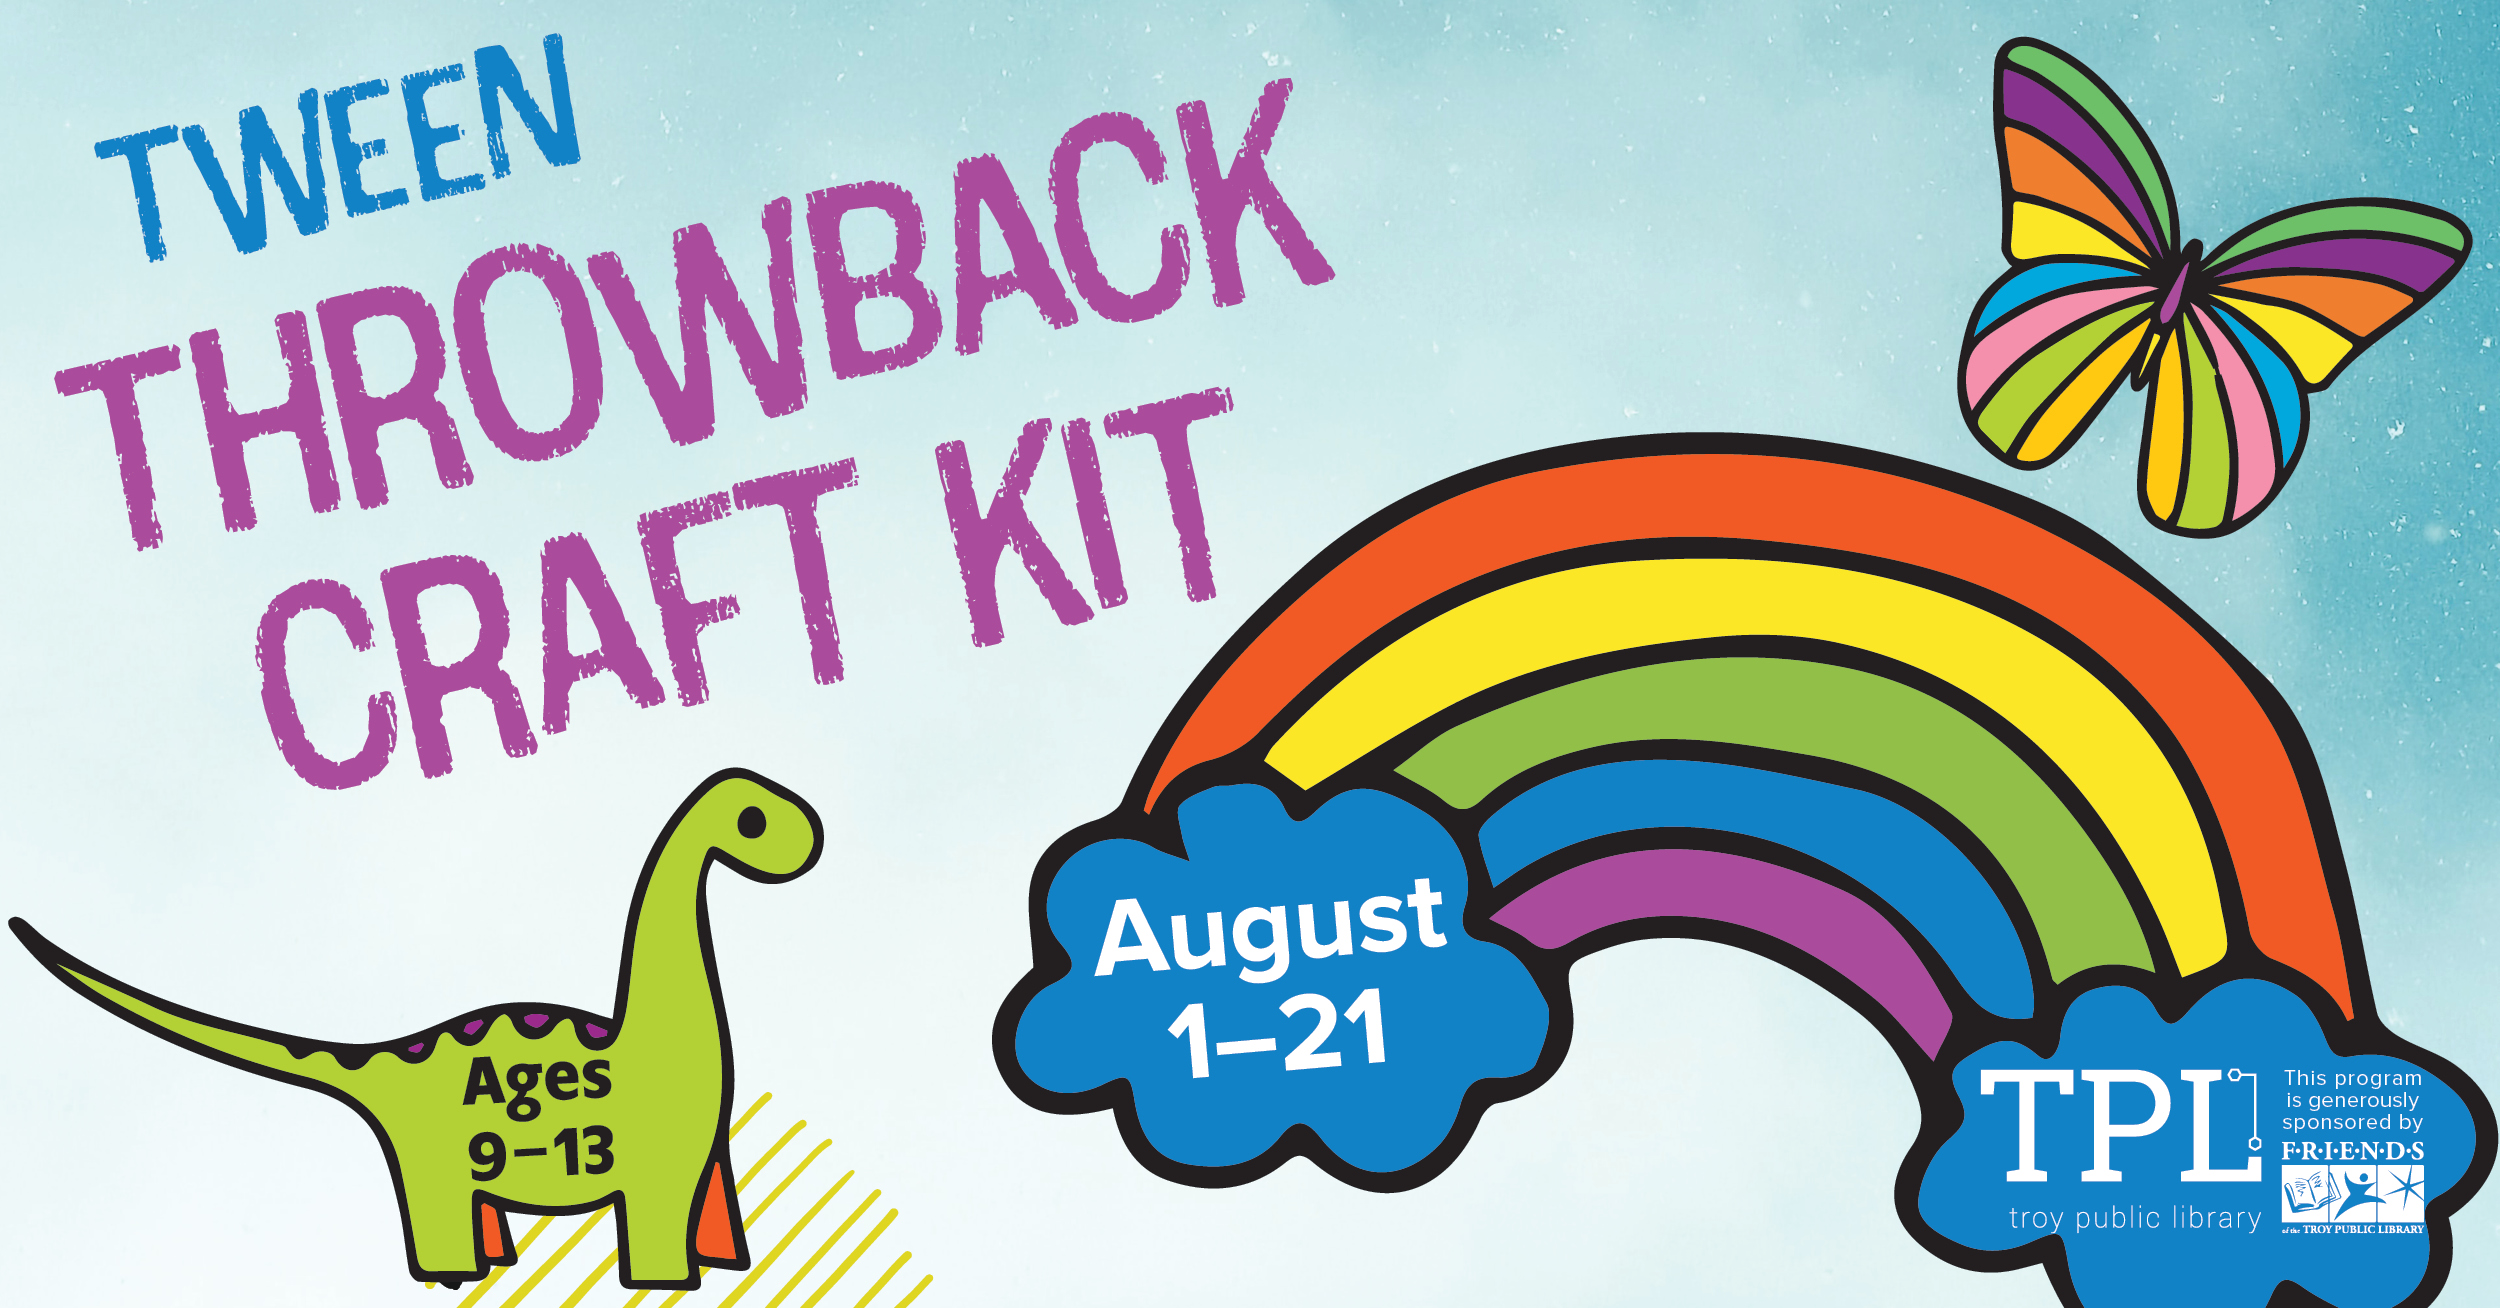 Tween Throwback Craft Kit August first through the twenty-first. Ages nine to thirtween